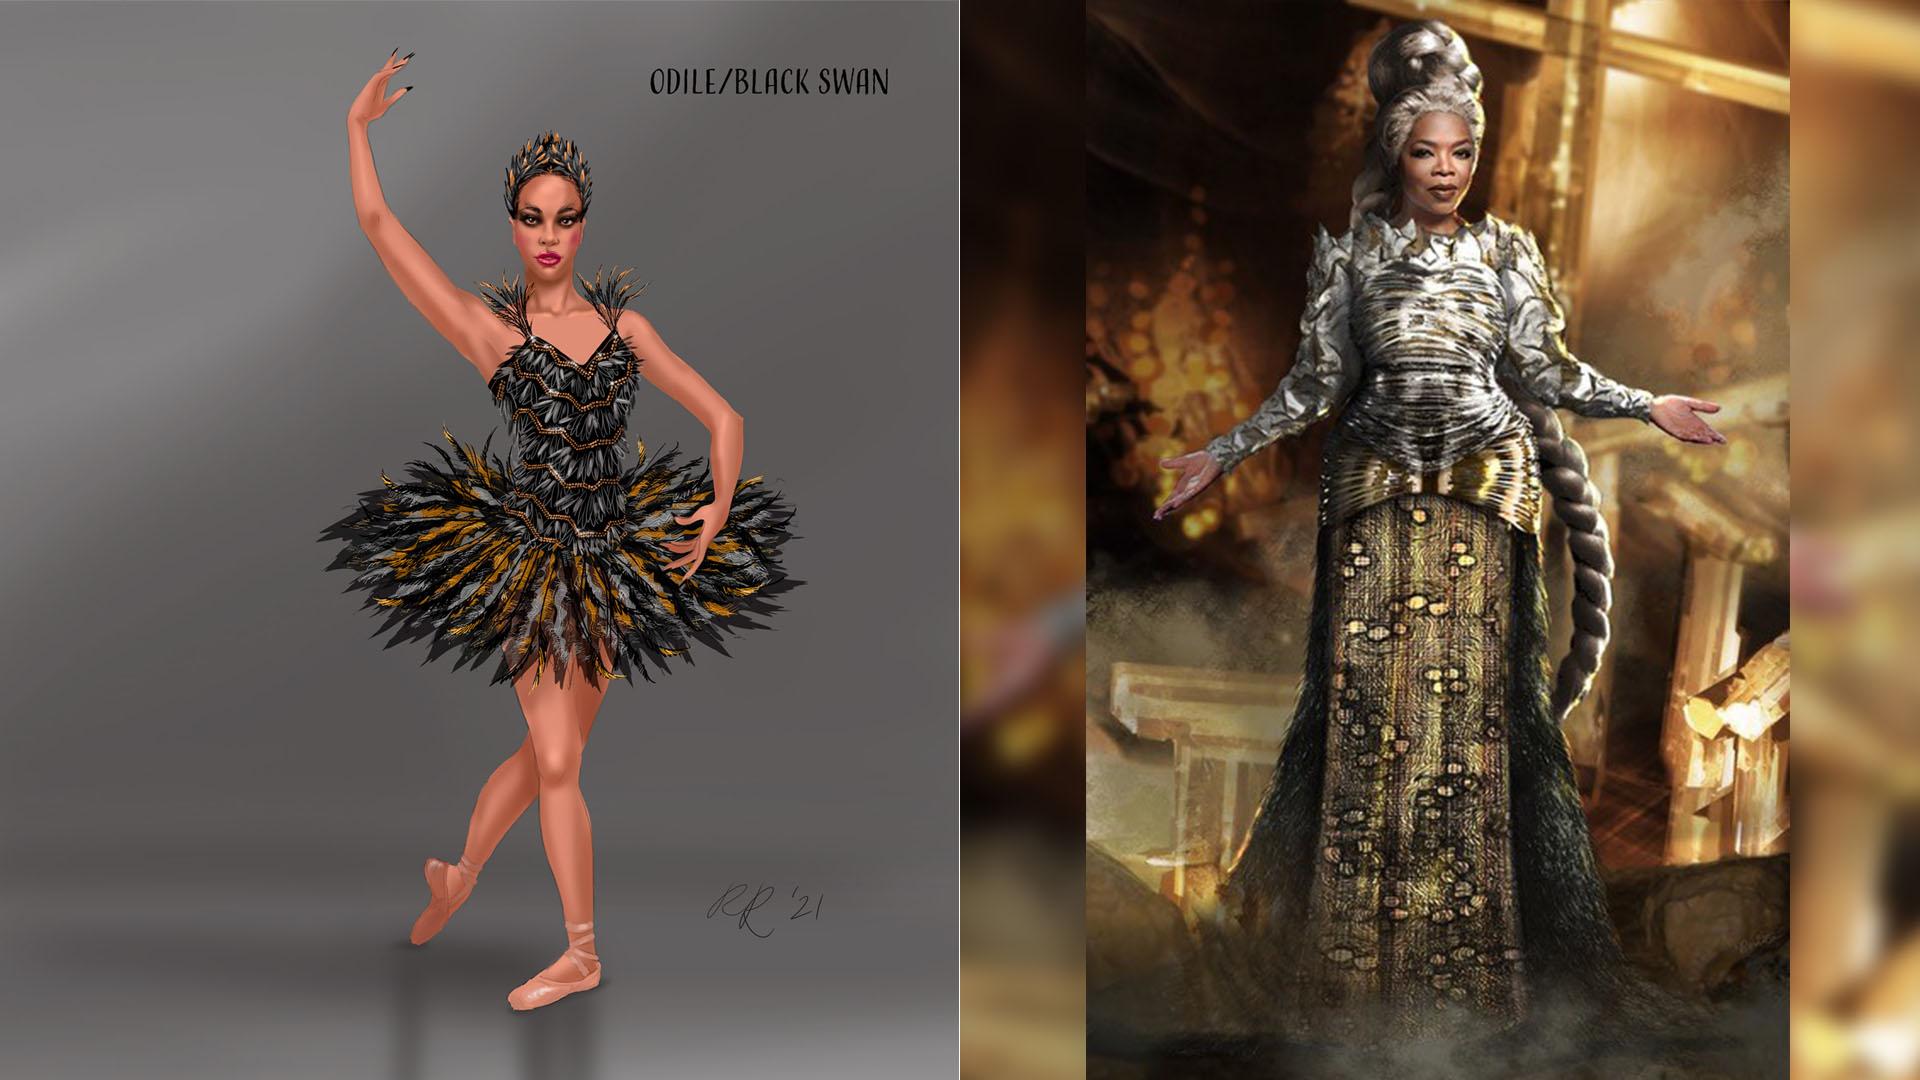 Left: Costume design by Robin Richesson. Right: Costume design by Phillip Boutte Jr.